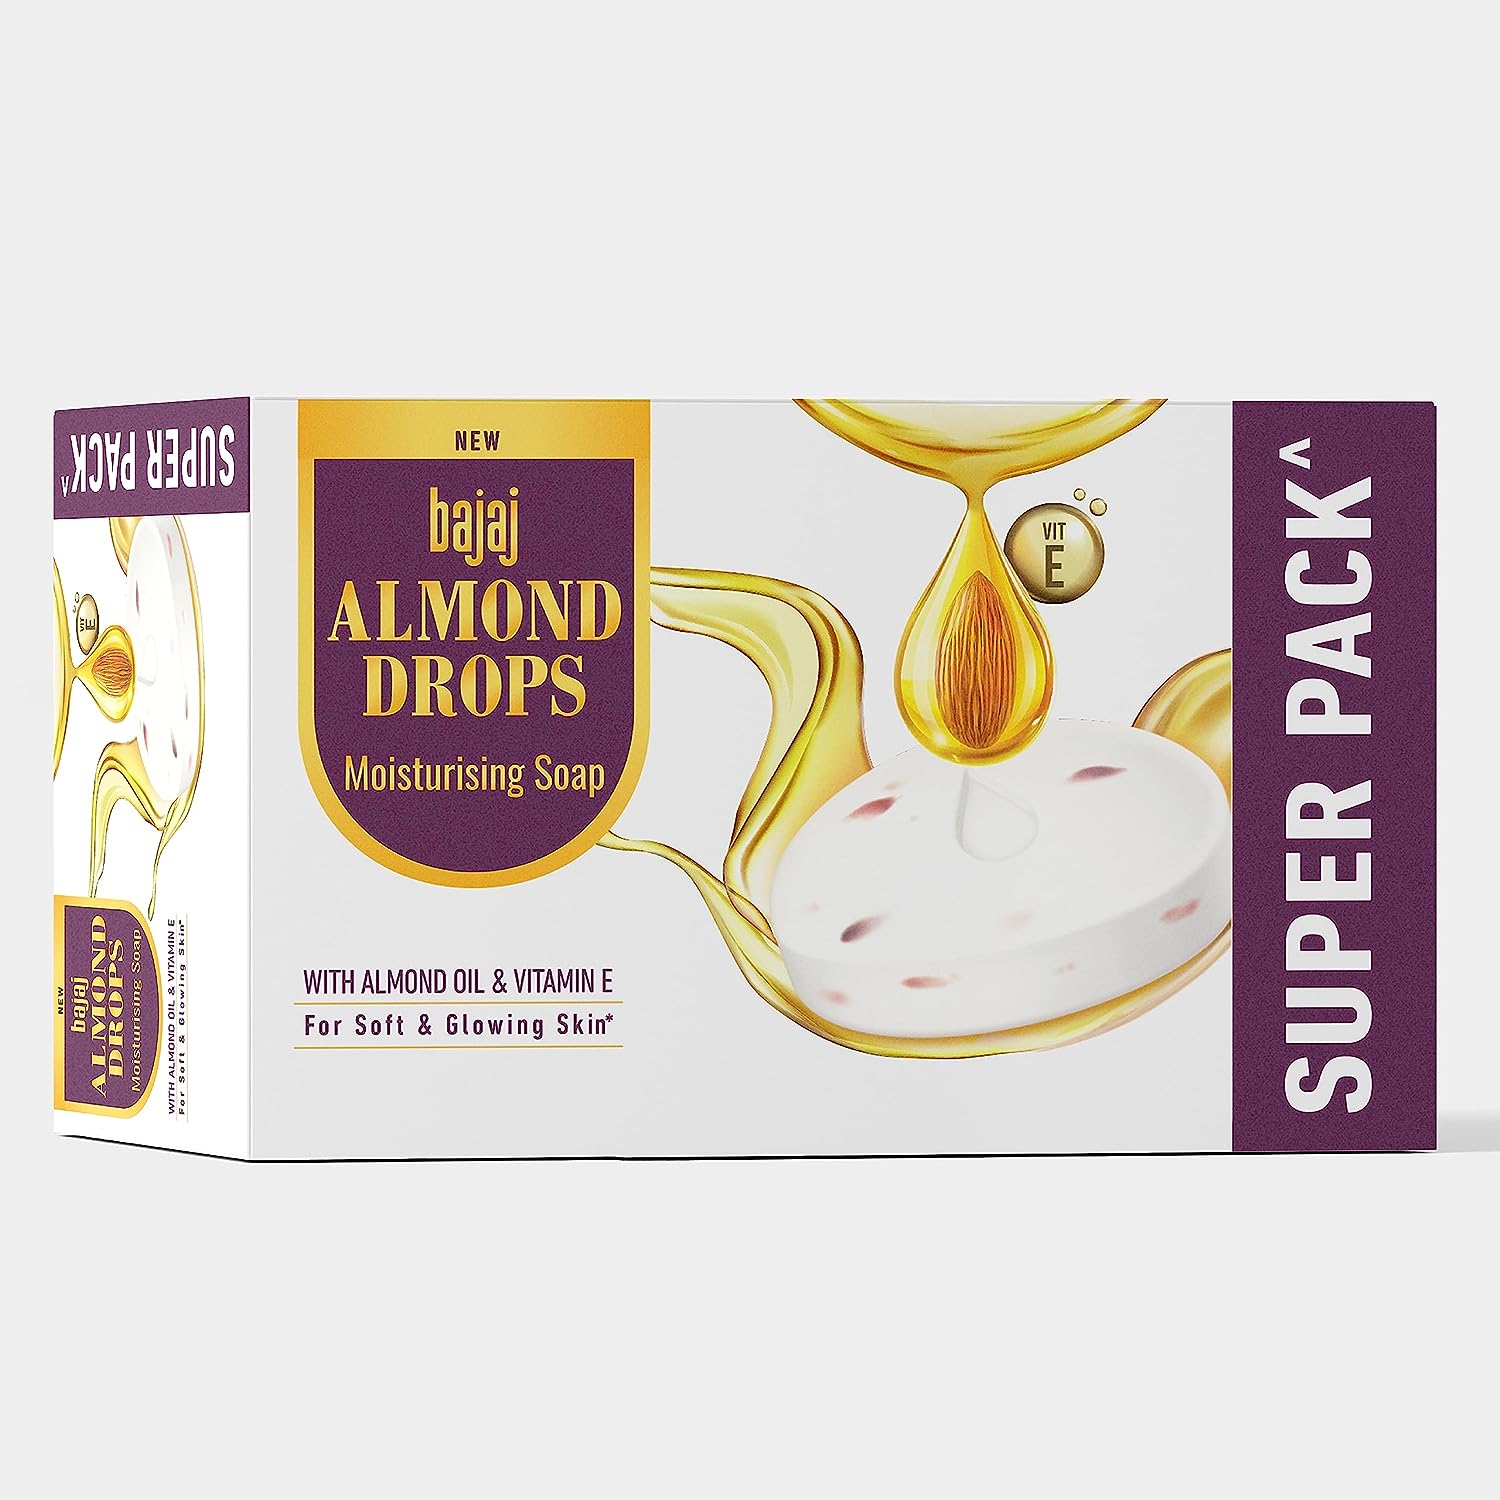 Bajaj Almond Drops Moisturizing Soap 5 X 125g